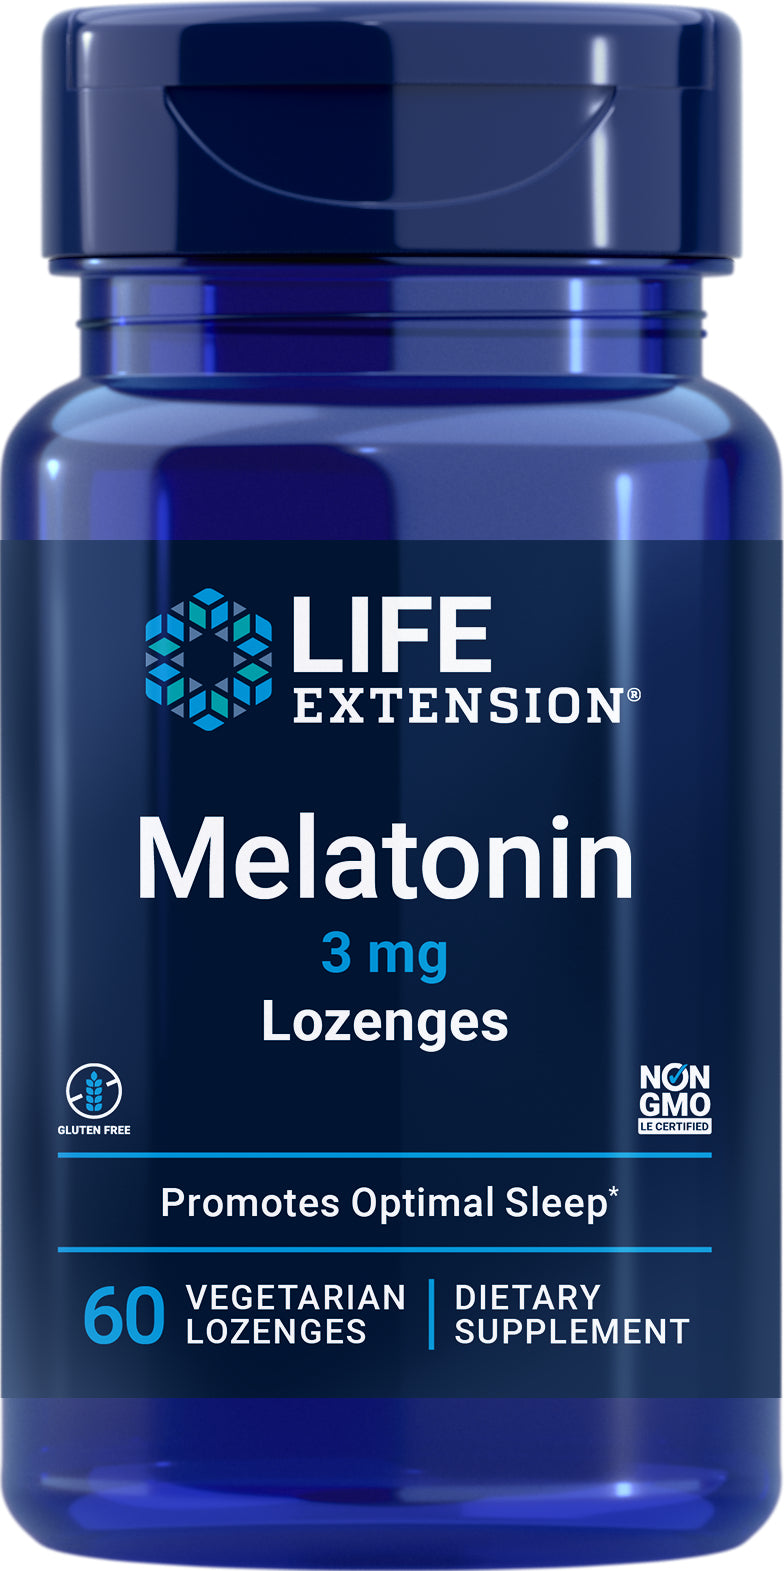 Melatonin 3 mg, 60 veg lozenges by Life Extension